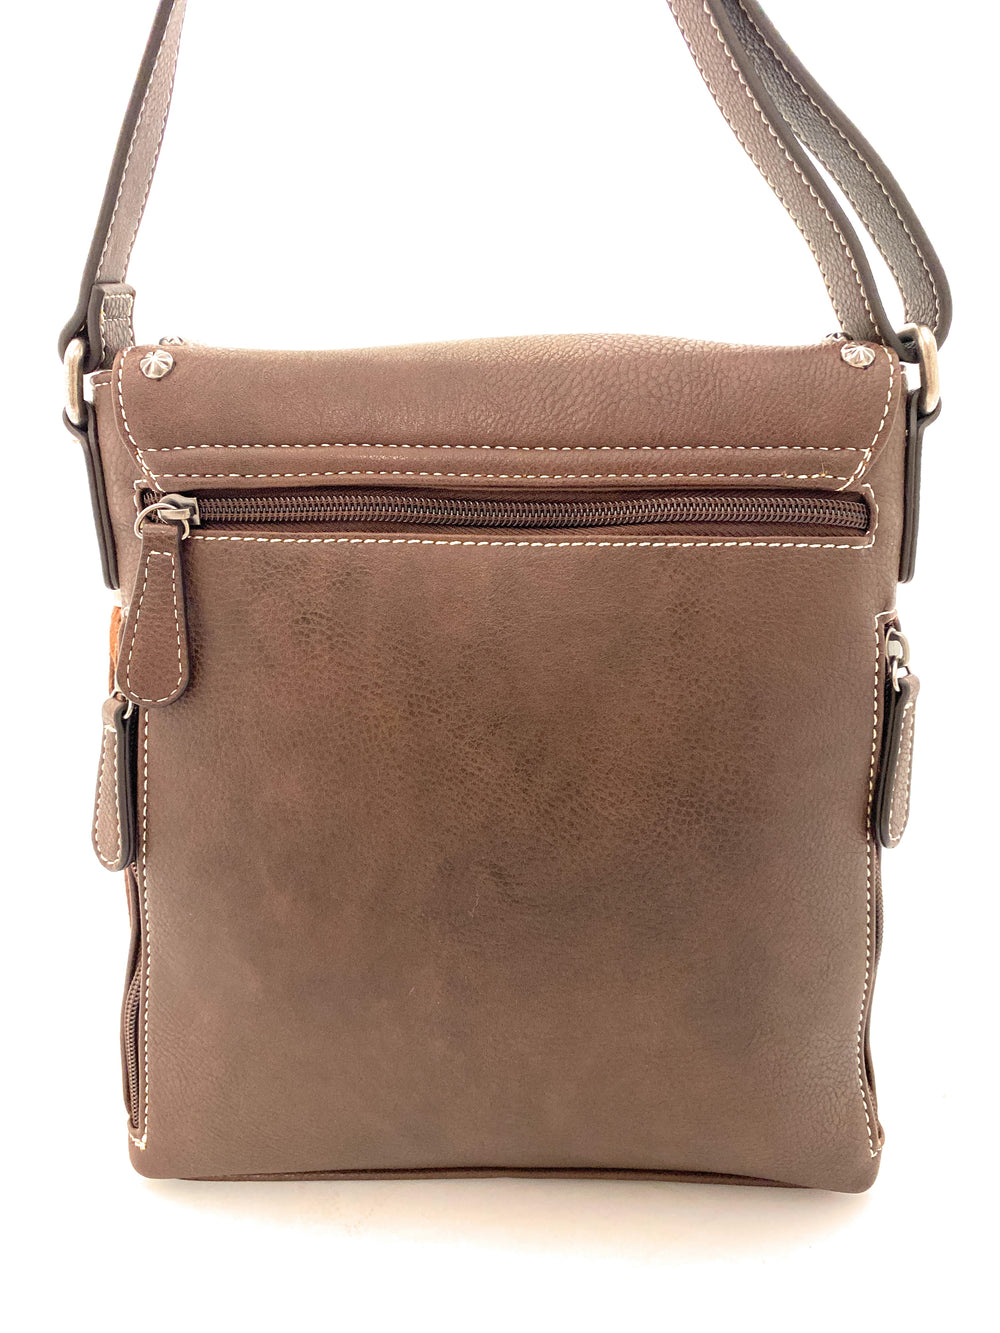 Buy Woodland Women's Handbag (Green) at Amazon.in